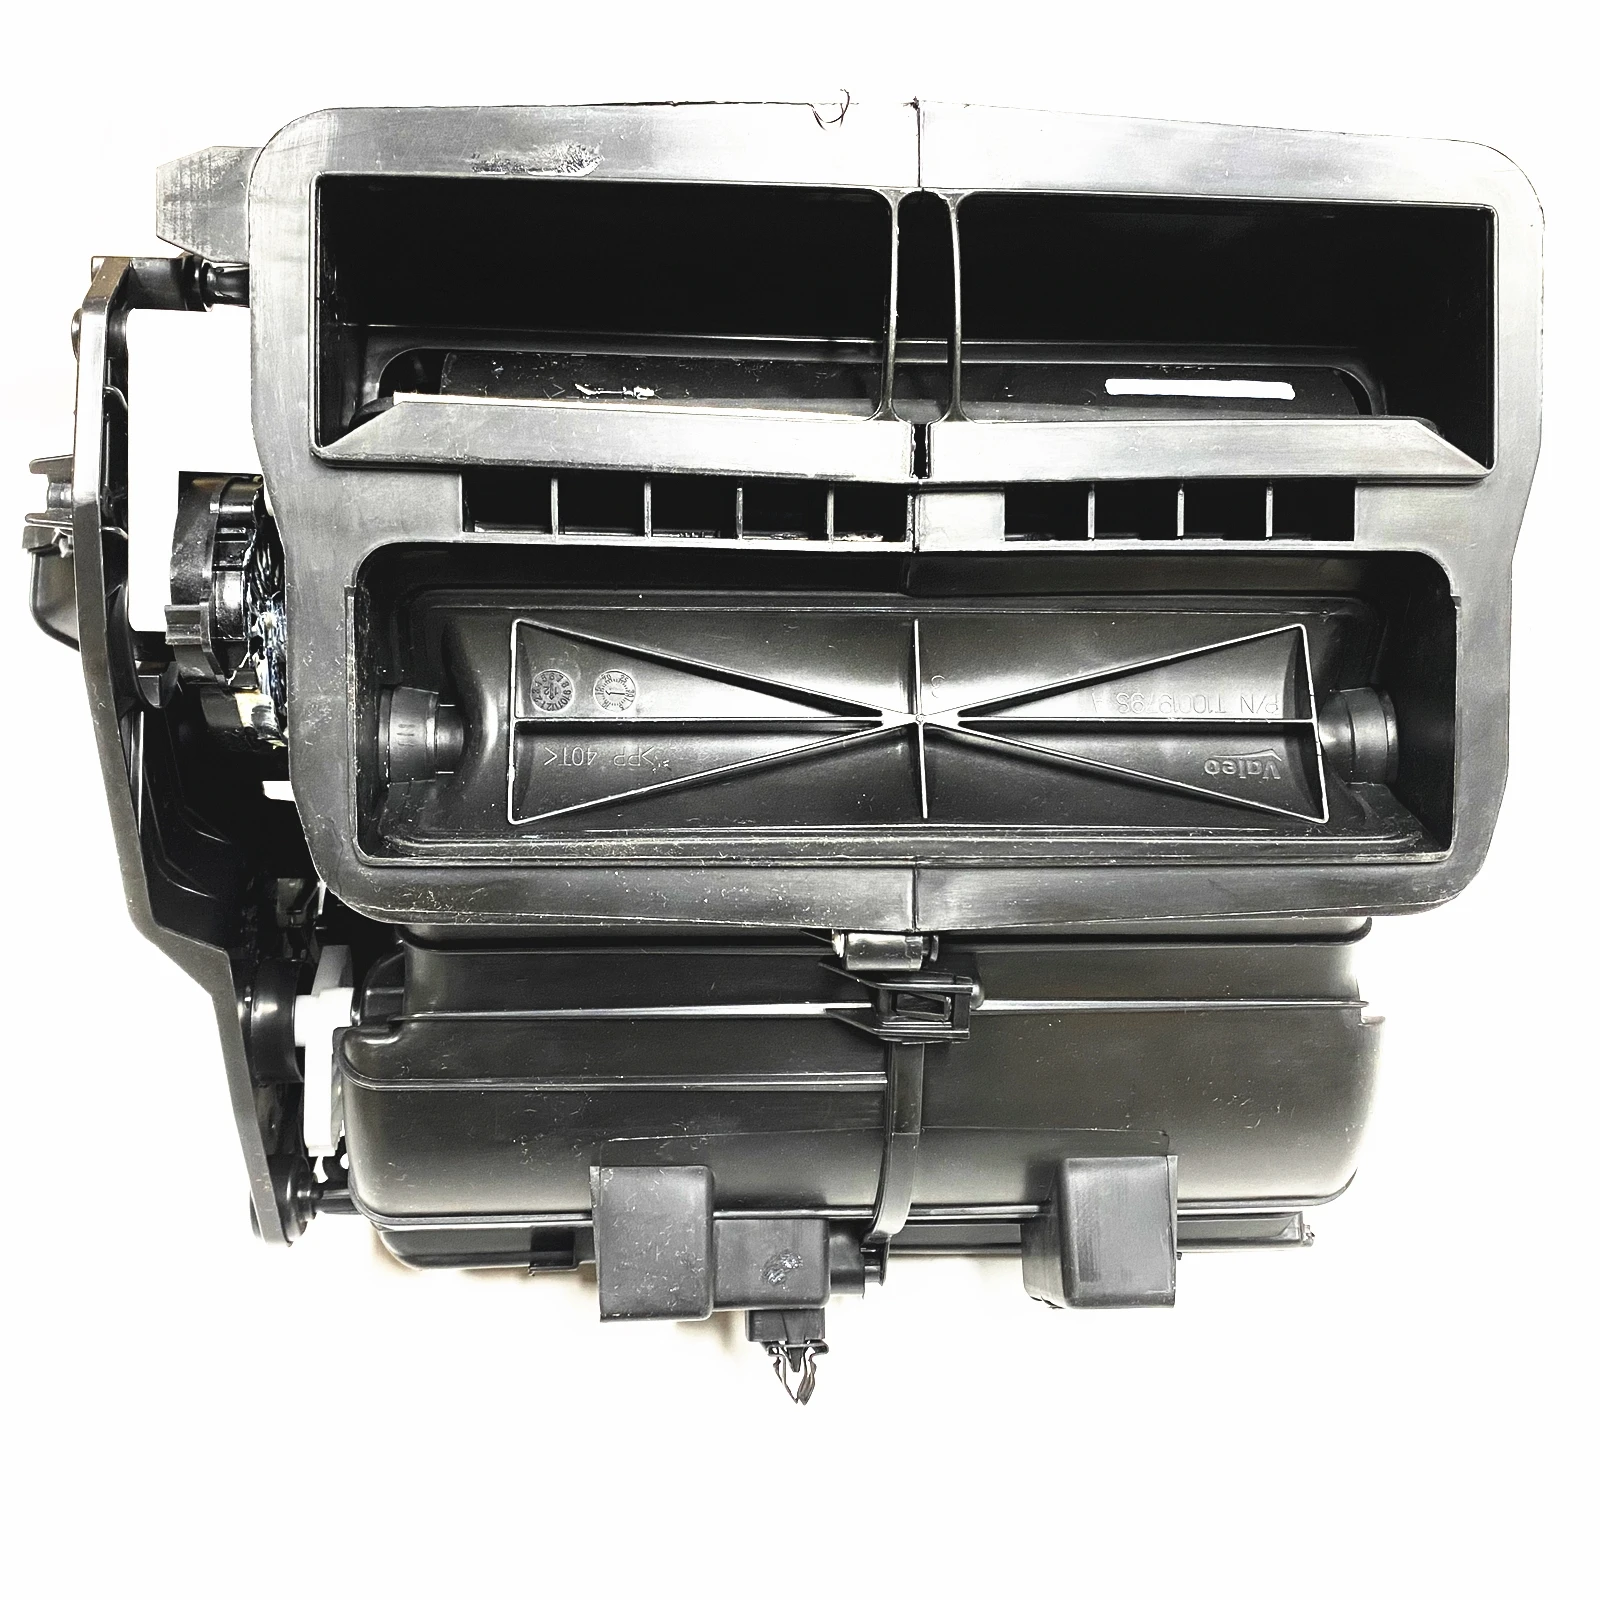 

Car Evaporator Heater Distribution Box Shell For Jeep Liberty 2008-2012 & Dodge Nitro 2007-2011